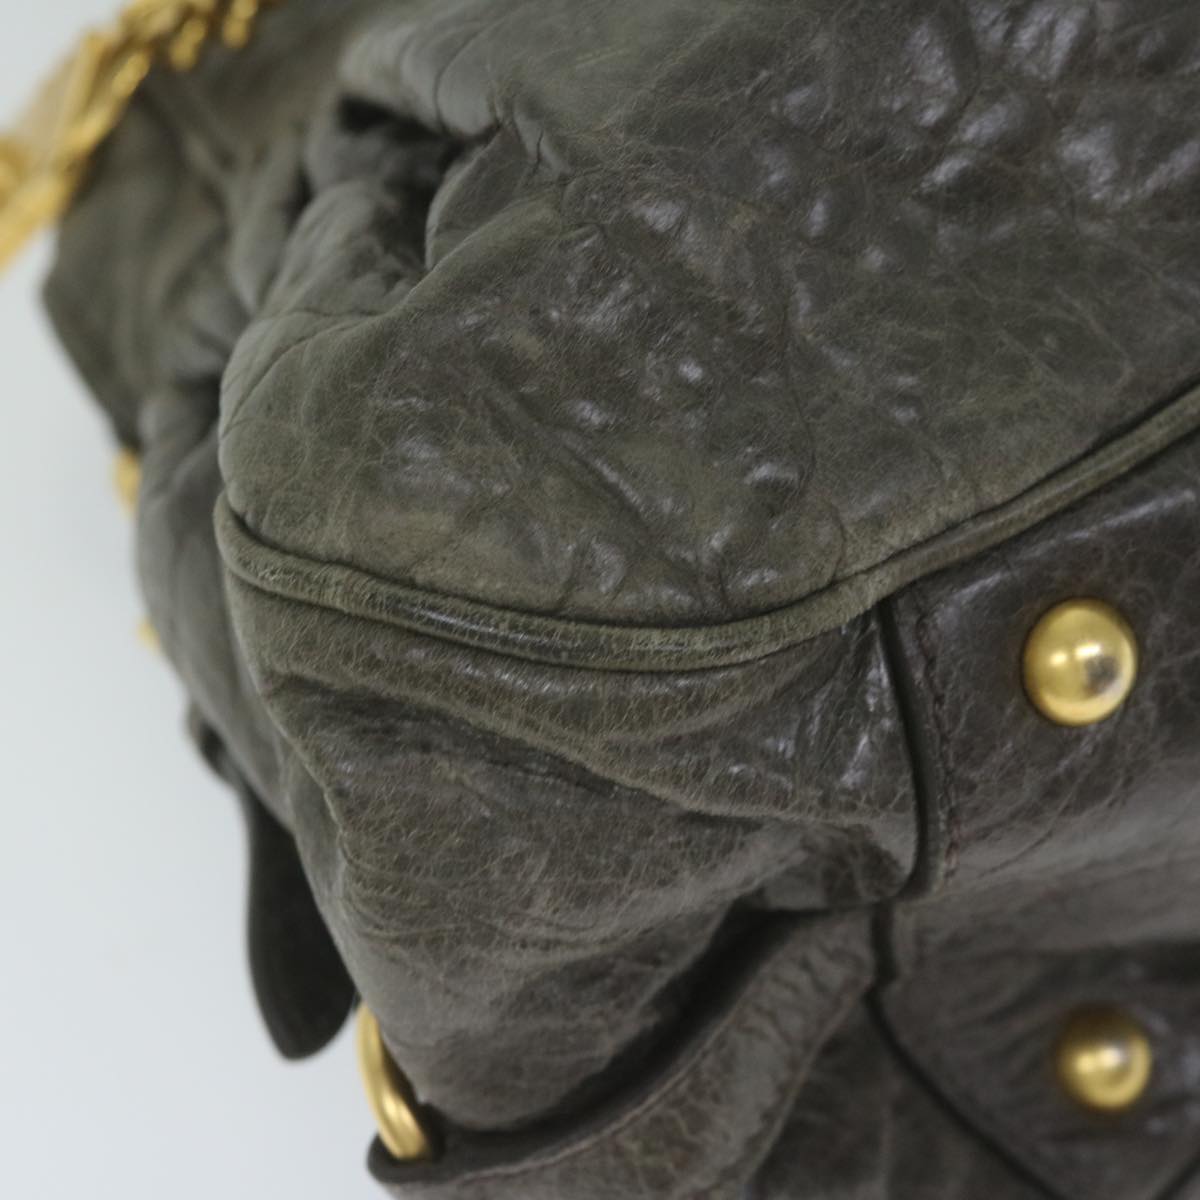 Miu Miu Hand Bag Leather Gray Auth yk9515